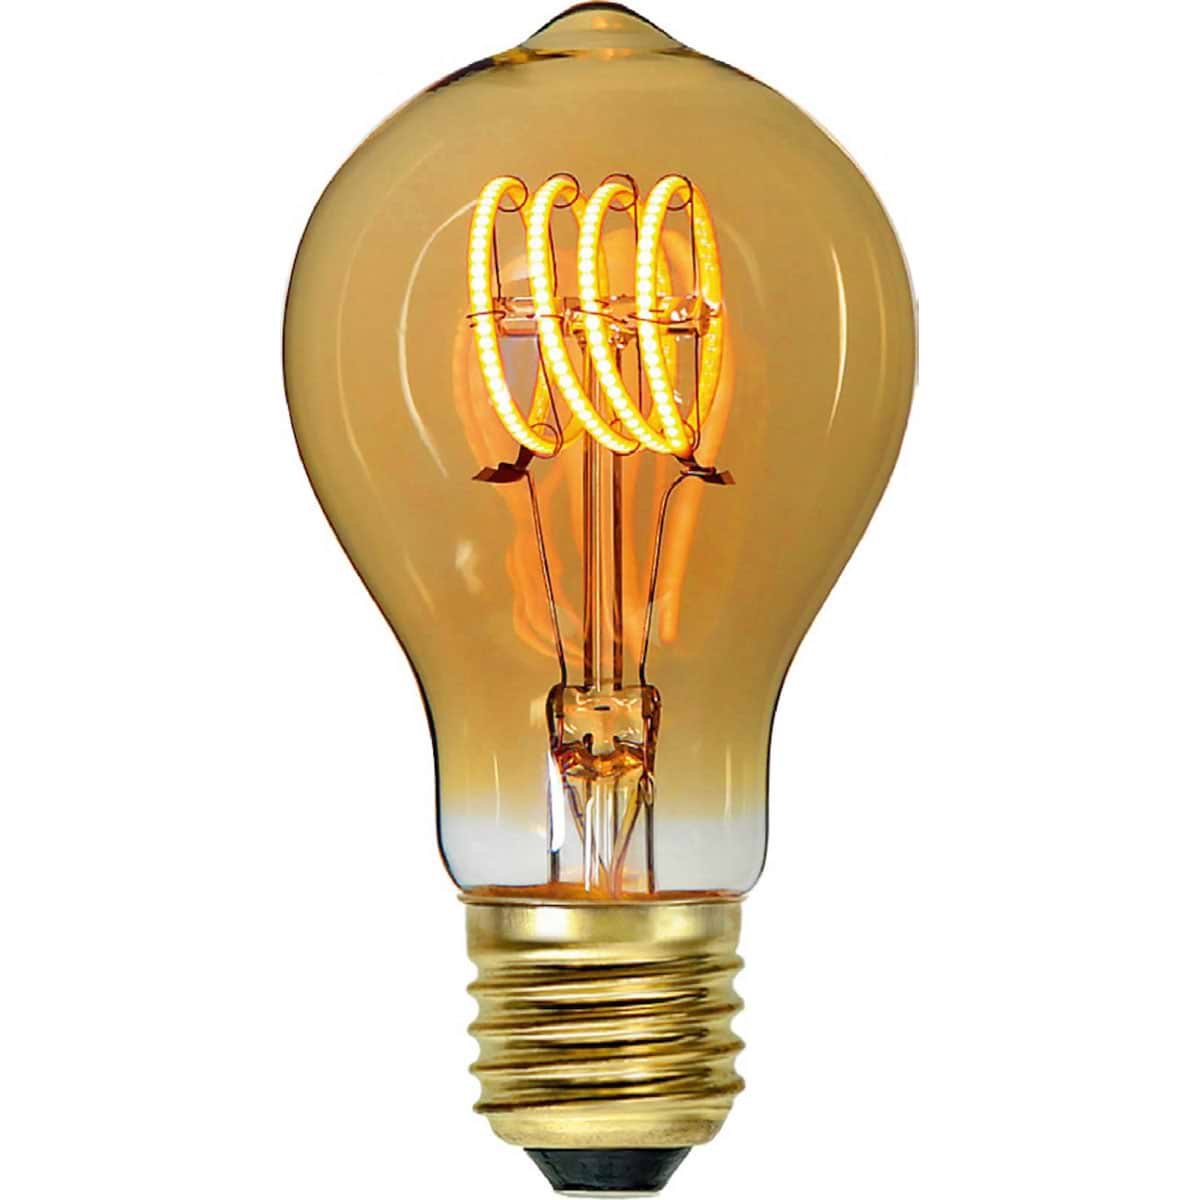 Lang Kennis maken mengsel LED Spiraal lamp 6W 3-step dimbaar, voor standaardlamp E27 fitting, 6 Watt,  Amber. Decoratief en dimbaar. HIGH LIGHT - L270036 - Webo Verlichting